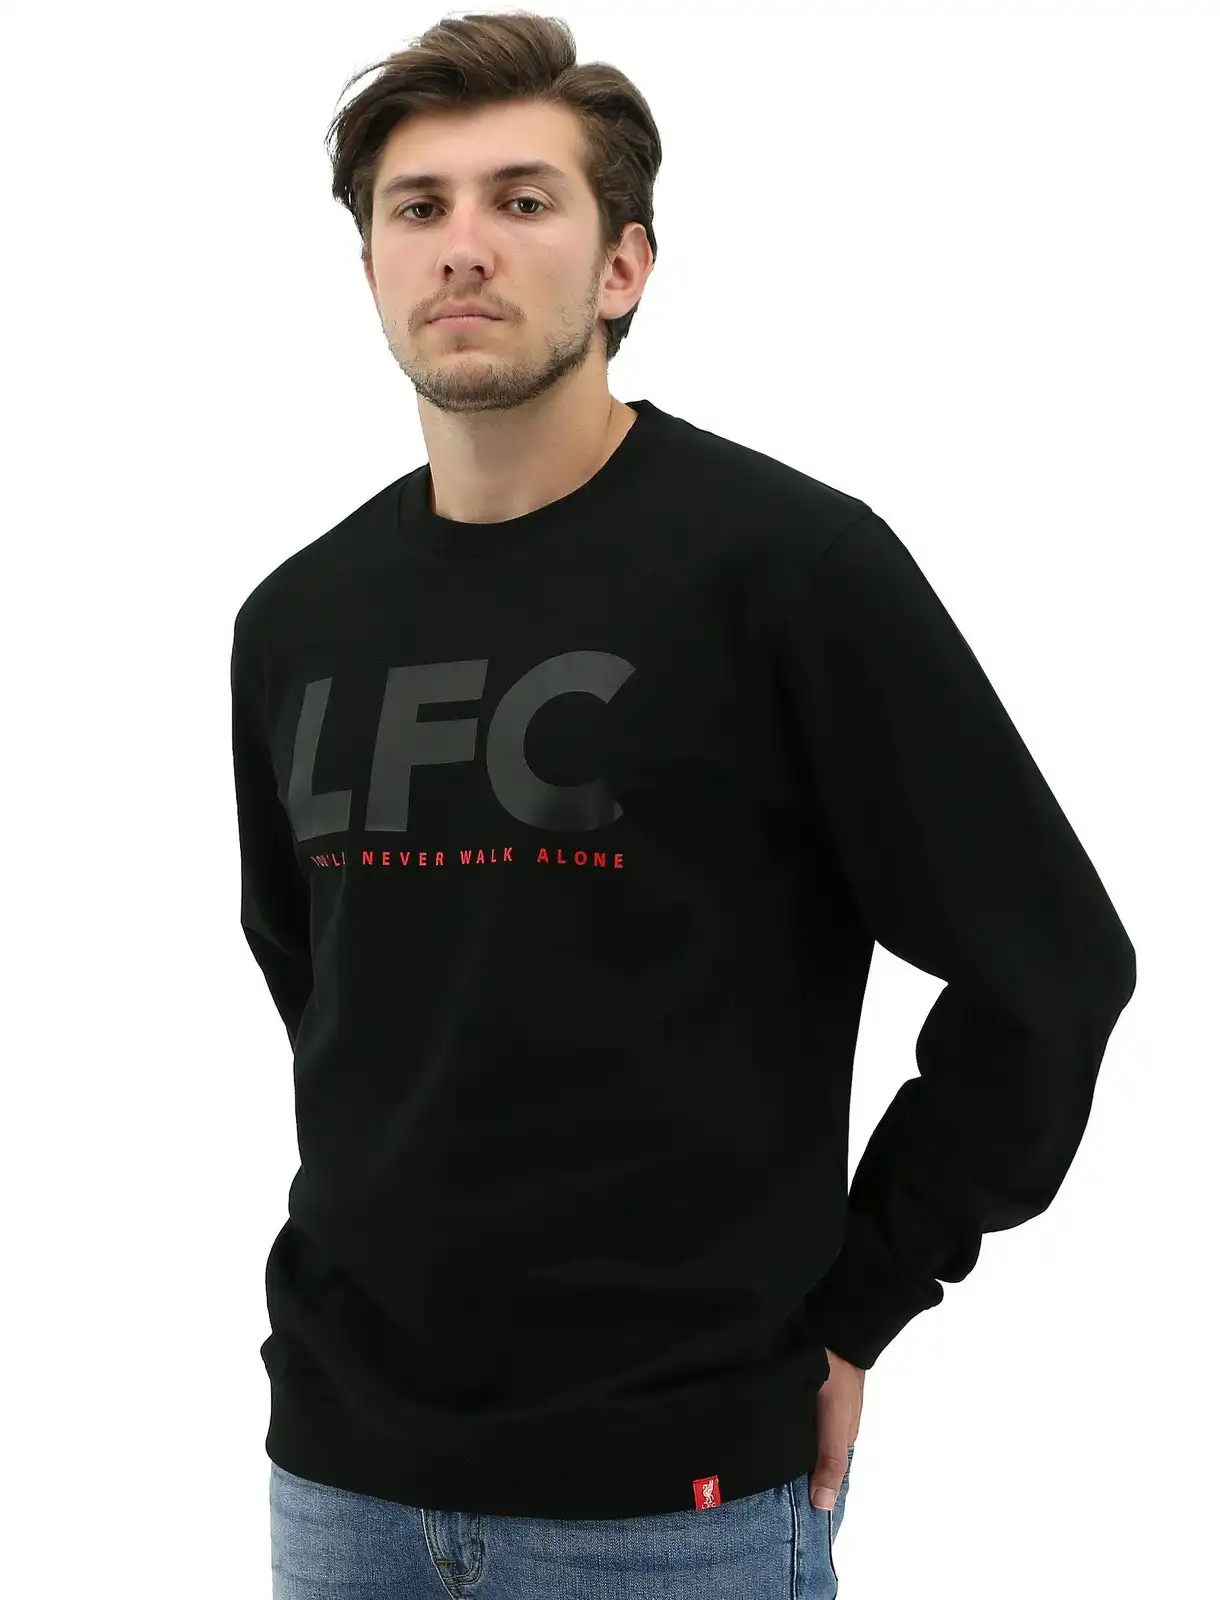 Liverpool FC Men's Crew Jumper Sweatshirt Winter Warm Soccer Football LFC - Black